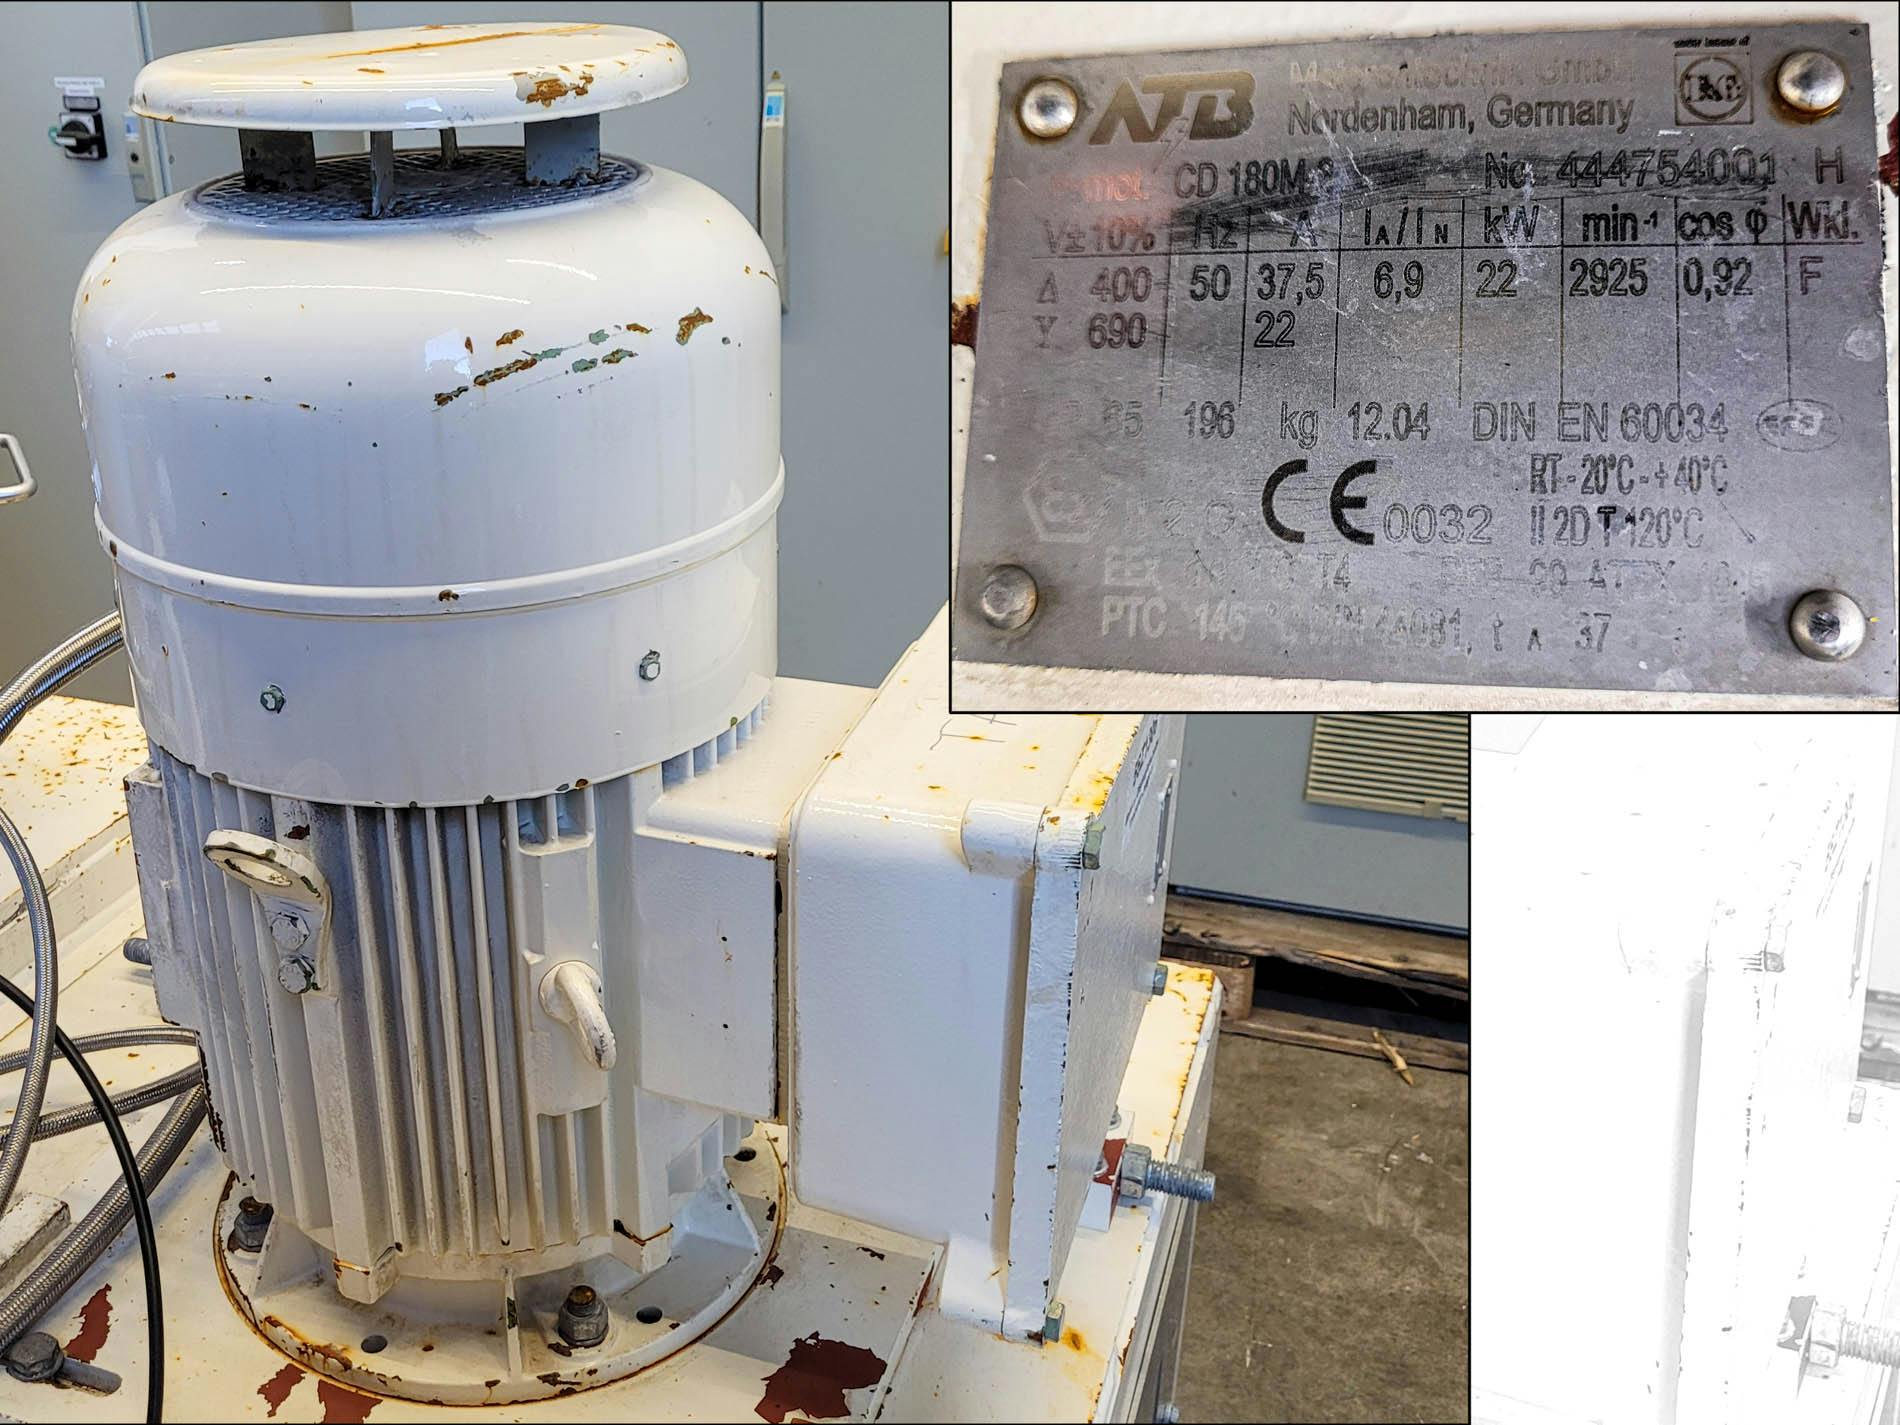 Hosokawa Micron DMR-2H FLASH-DROGER - Drying system - Continu droger - image 5